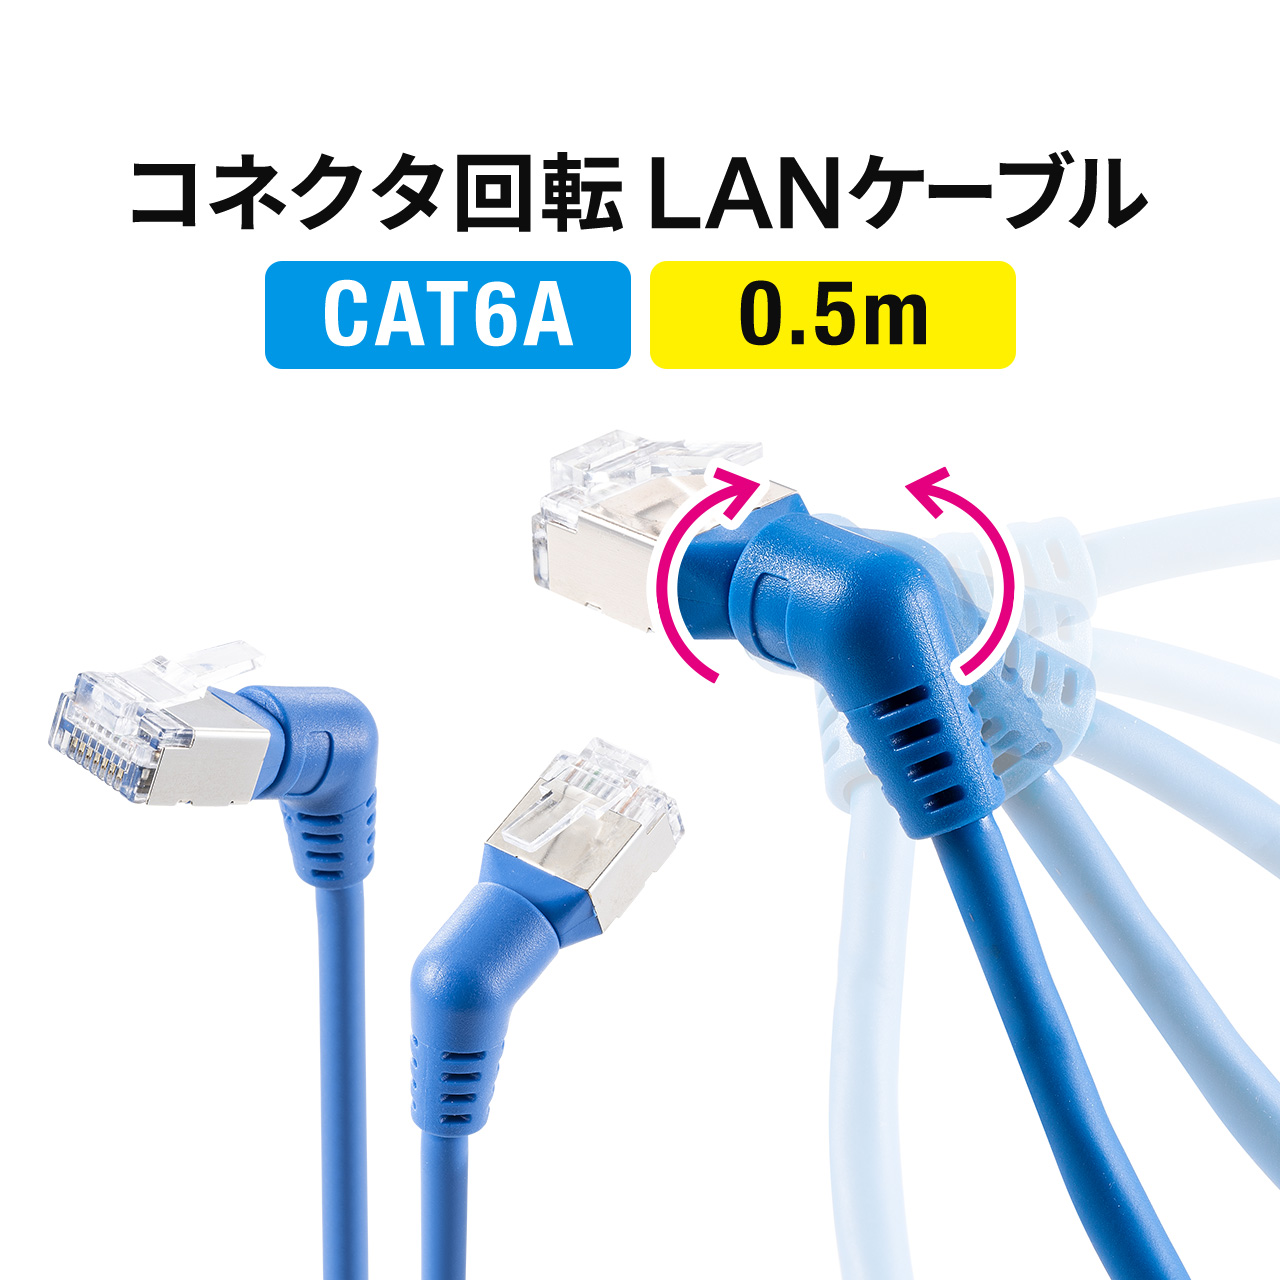 LANケーブル CAT6A 0.5m 50cm カテゴリ6A カテ6A ランケーブル 通信ケーブル 超高速 回転 L字 スリム コネクタ より線 ストレート 全結線 500-LAN6ASW-005BL